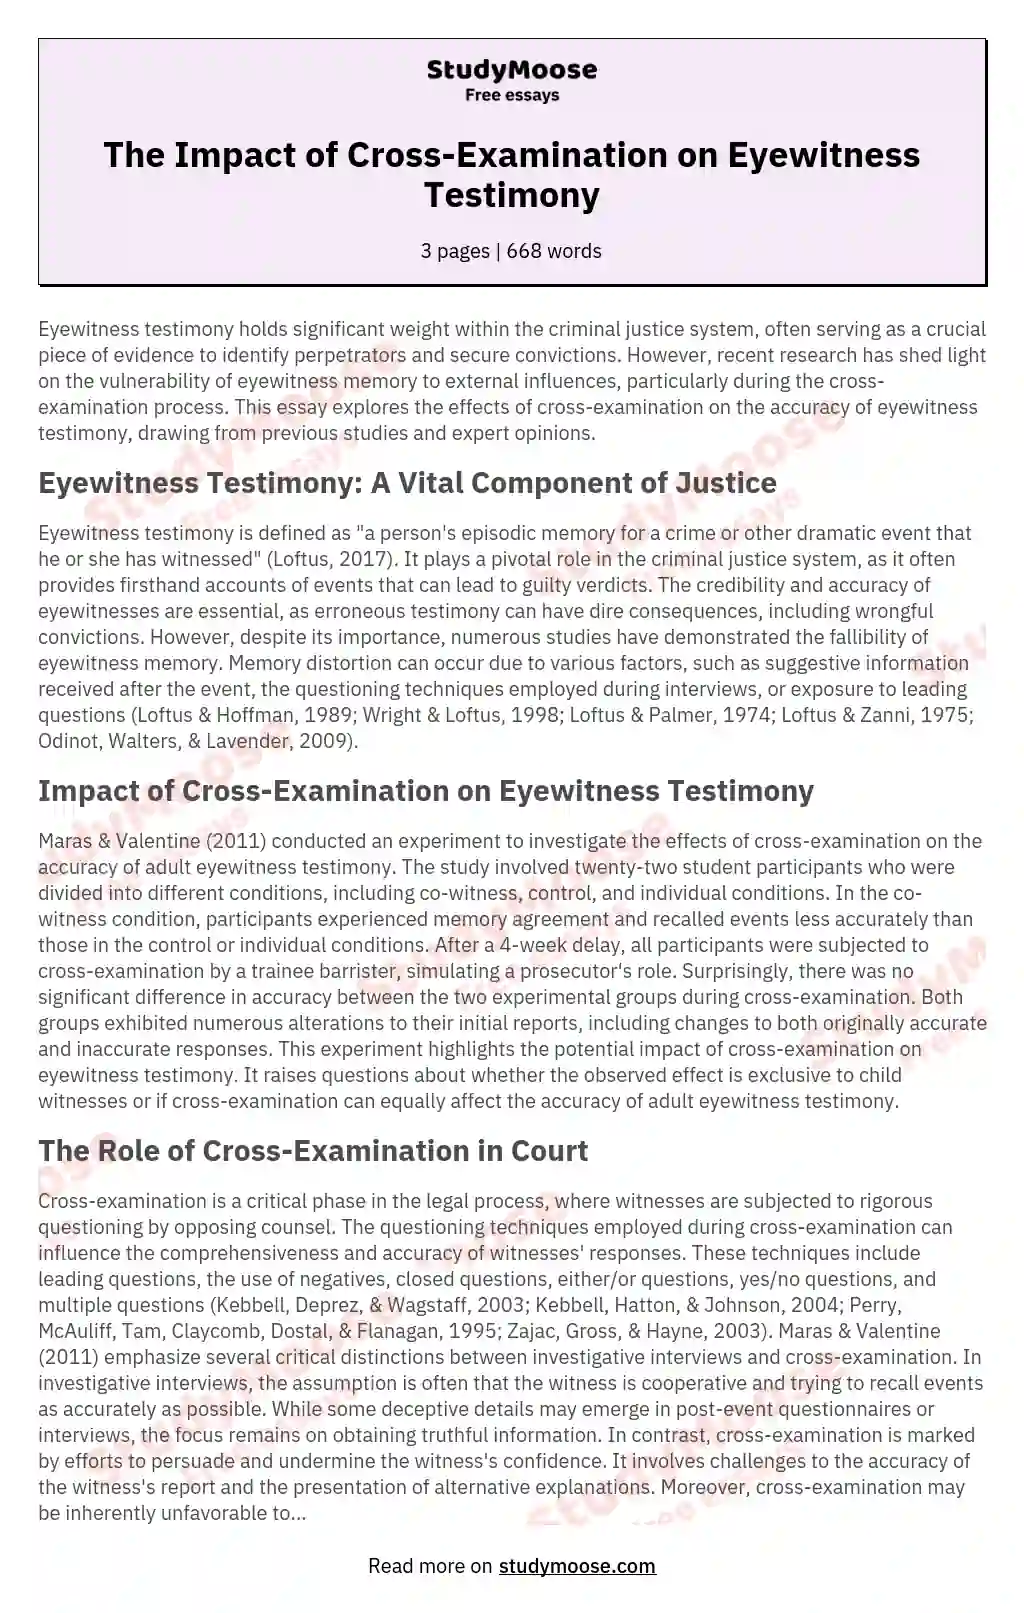 The Impact of Cross-Examination on Eyewitness Testimony essay